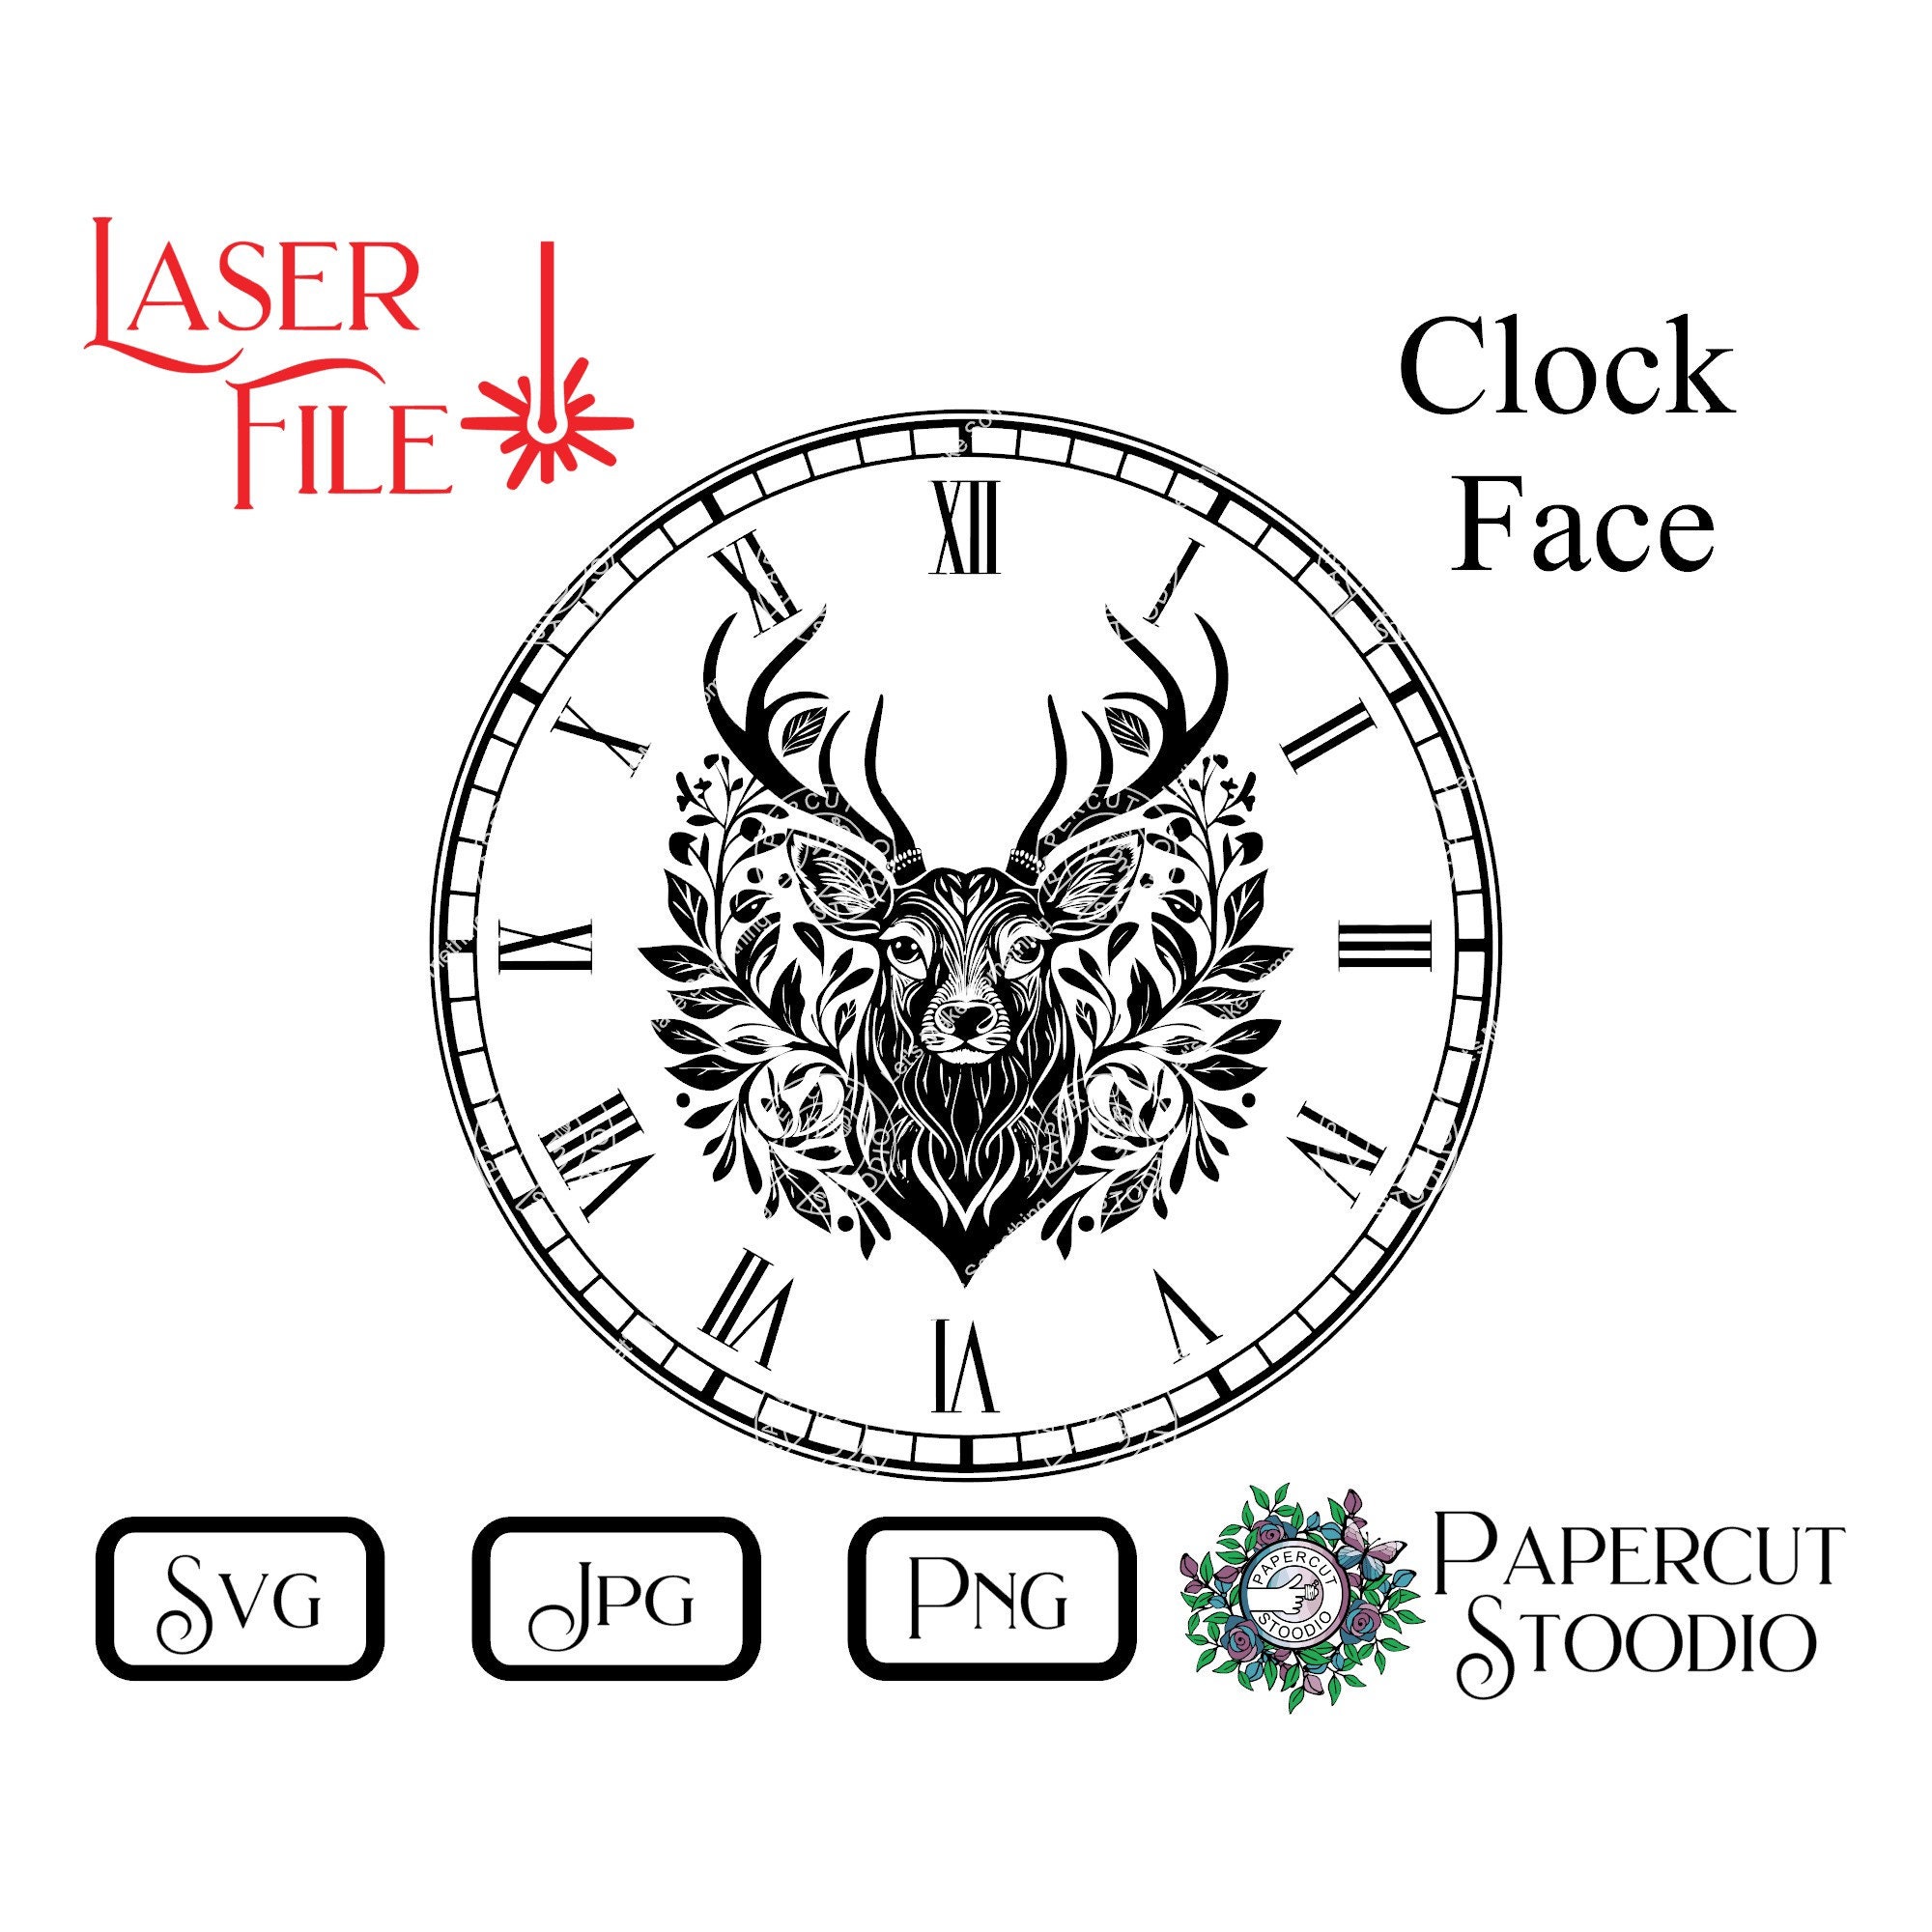 Clock Face Svg, Clock Face Template Dxf, Clock Face Png, Clock